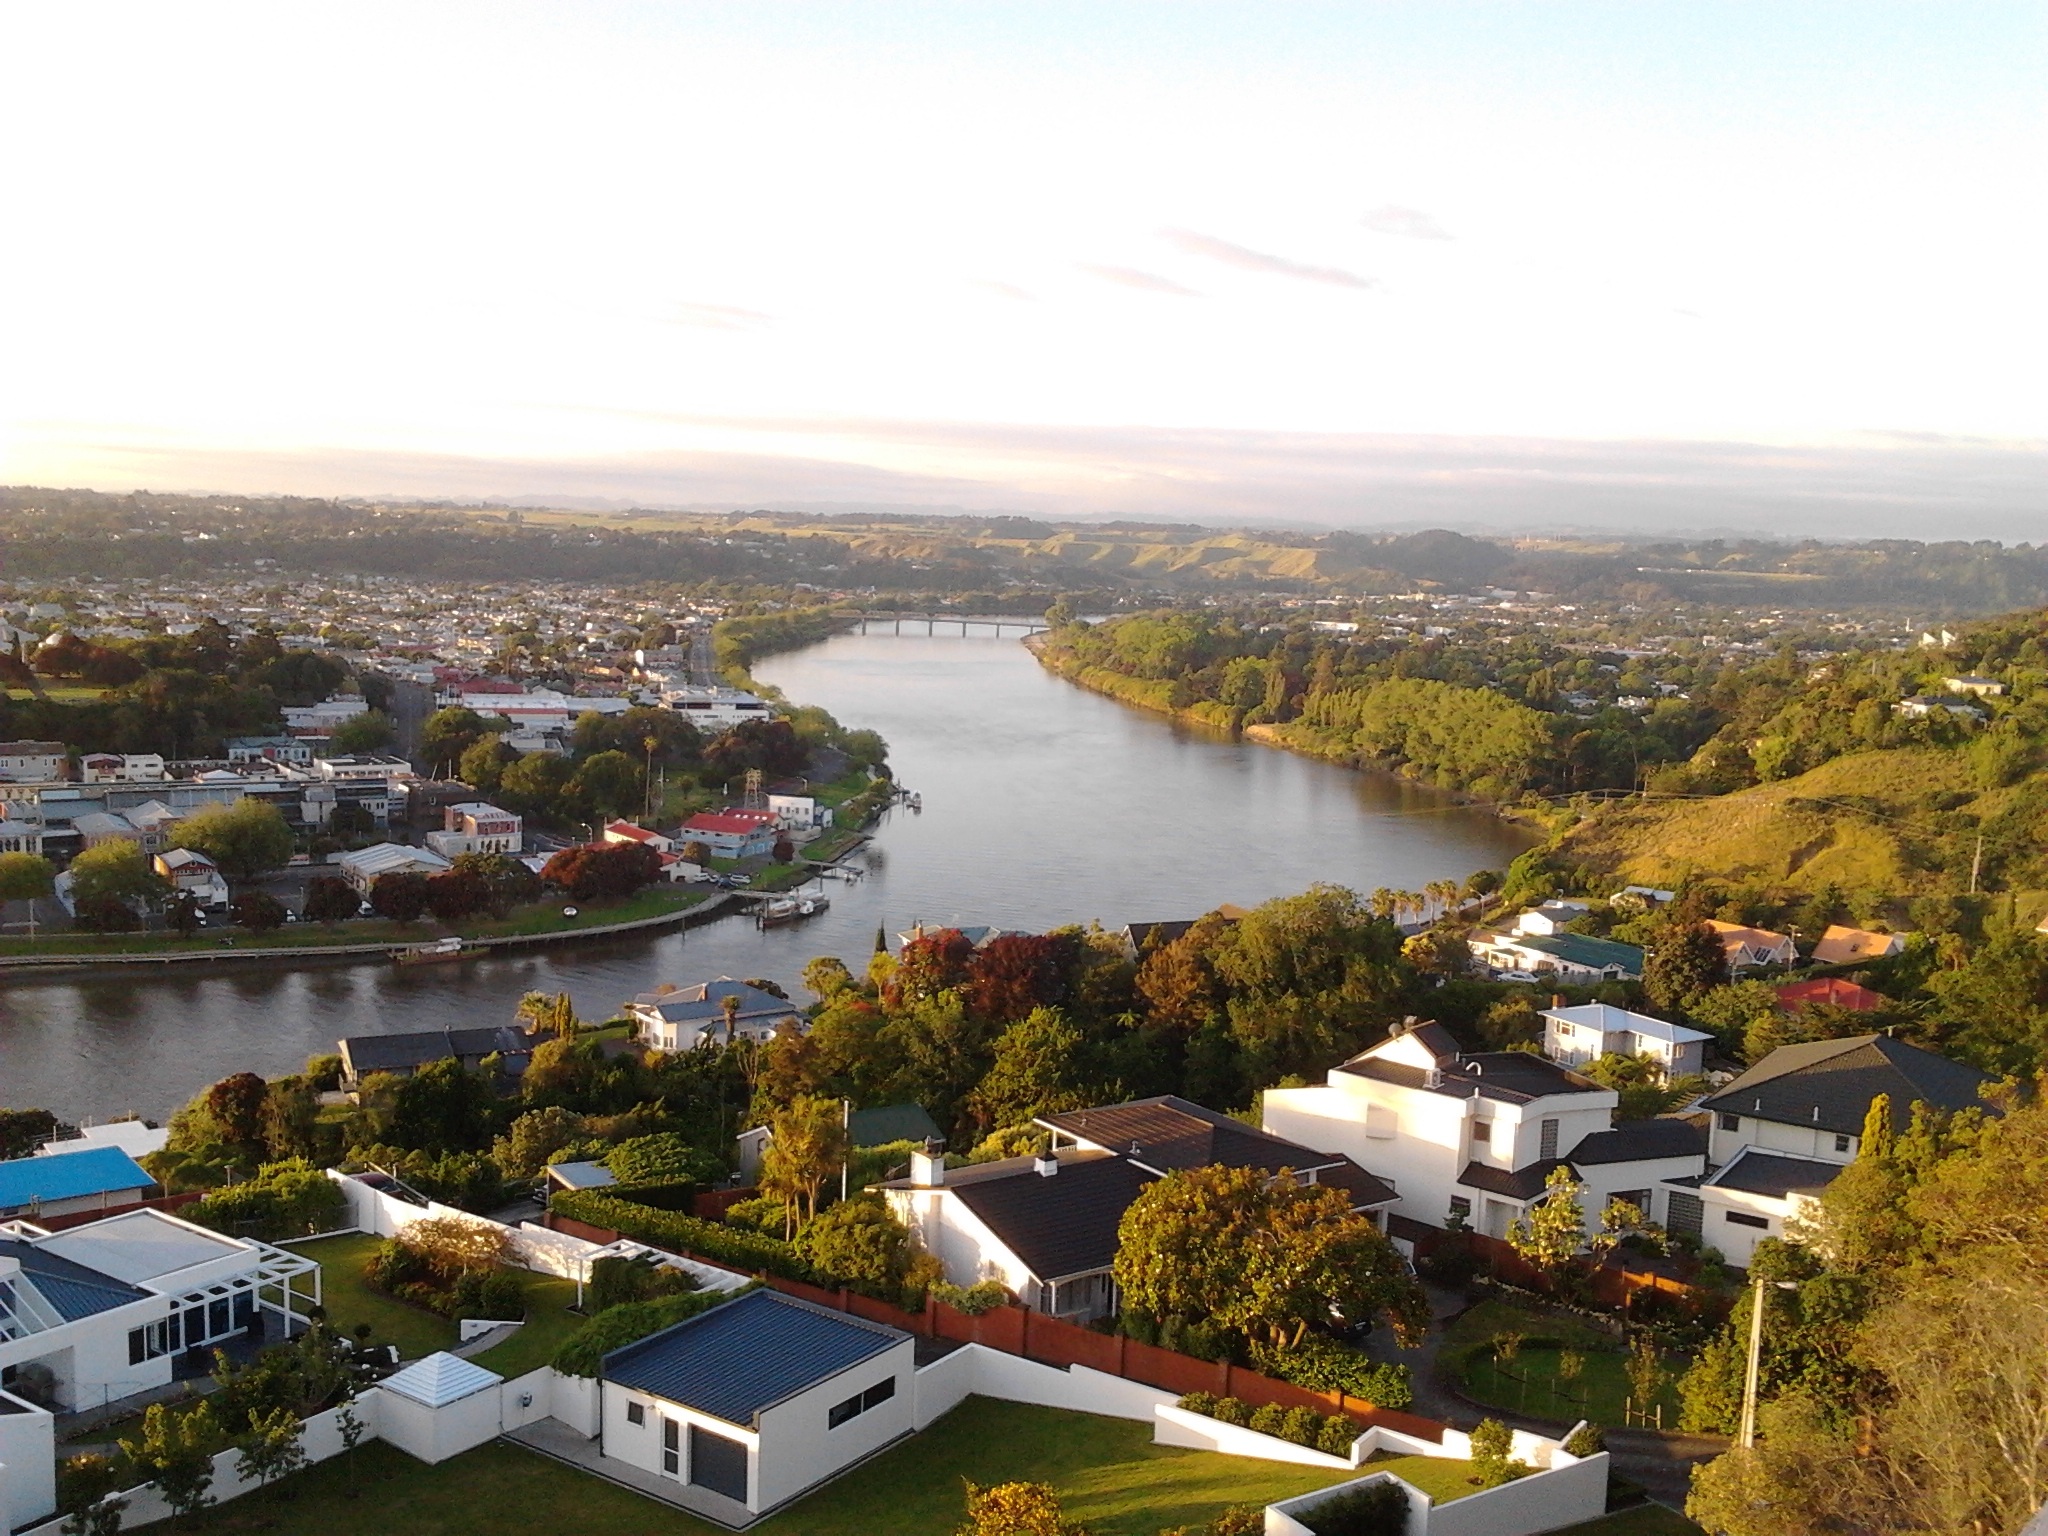 The Whanganui River runs through the city of Whanganui, New Zealand. (Pixabay/billiederamos)